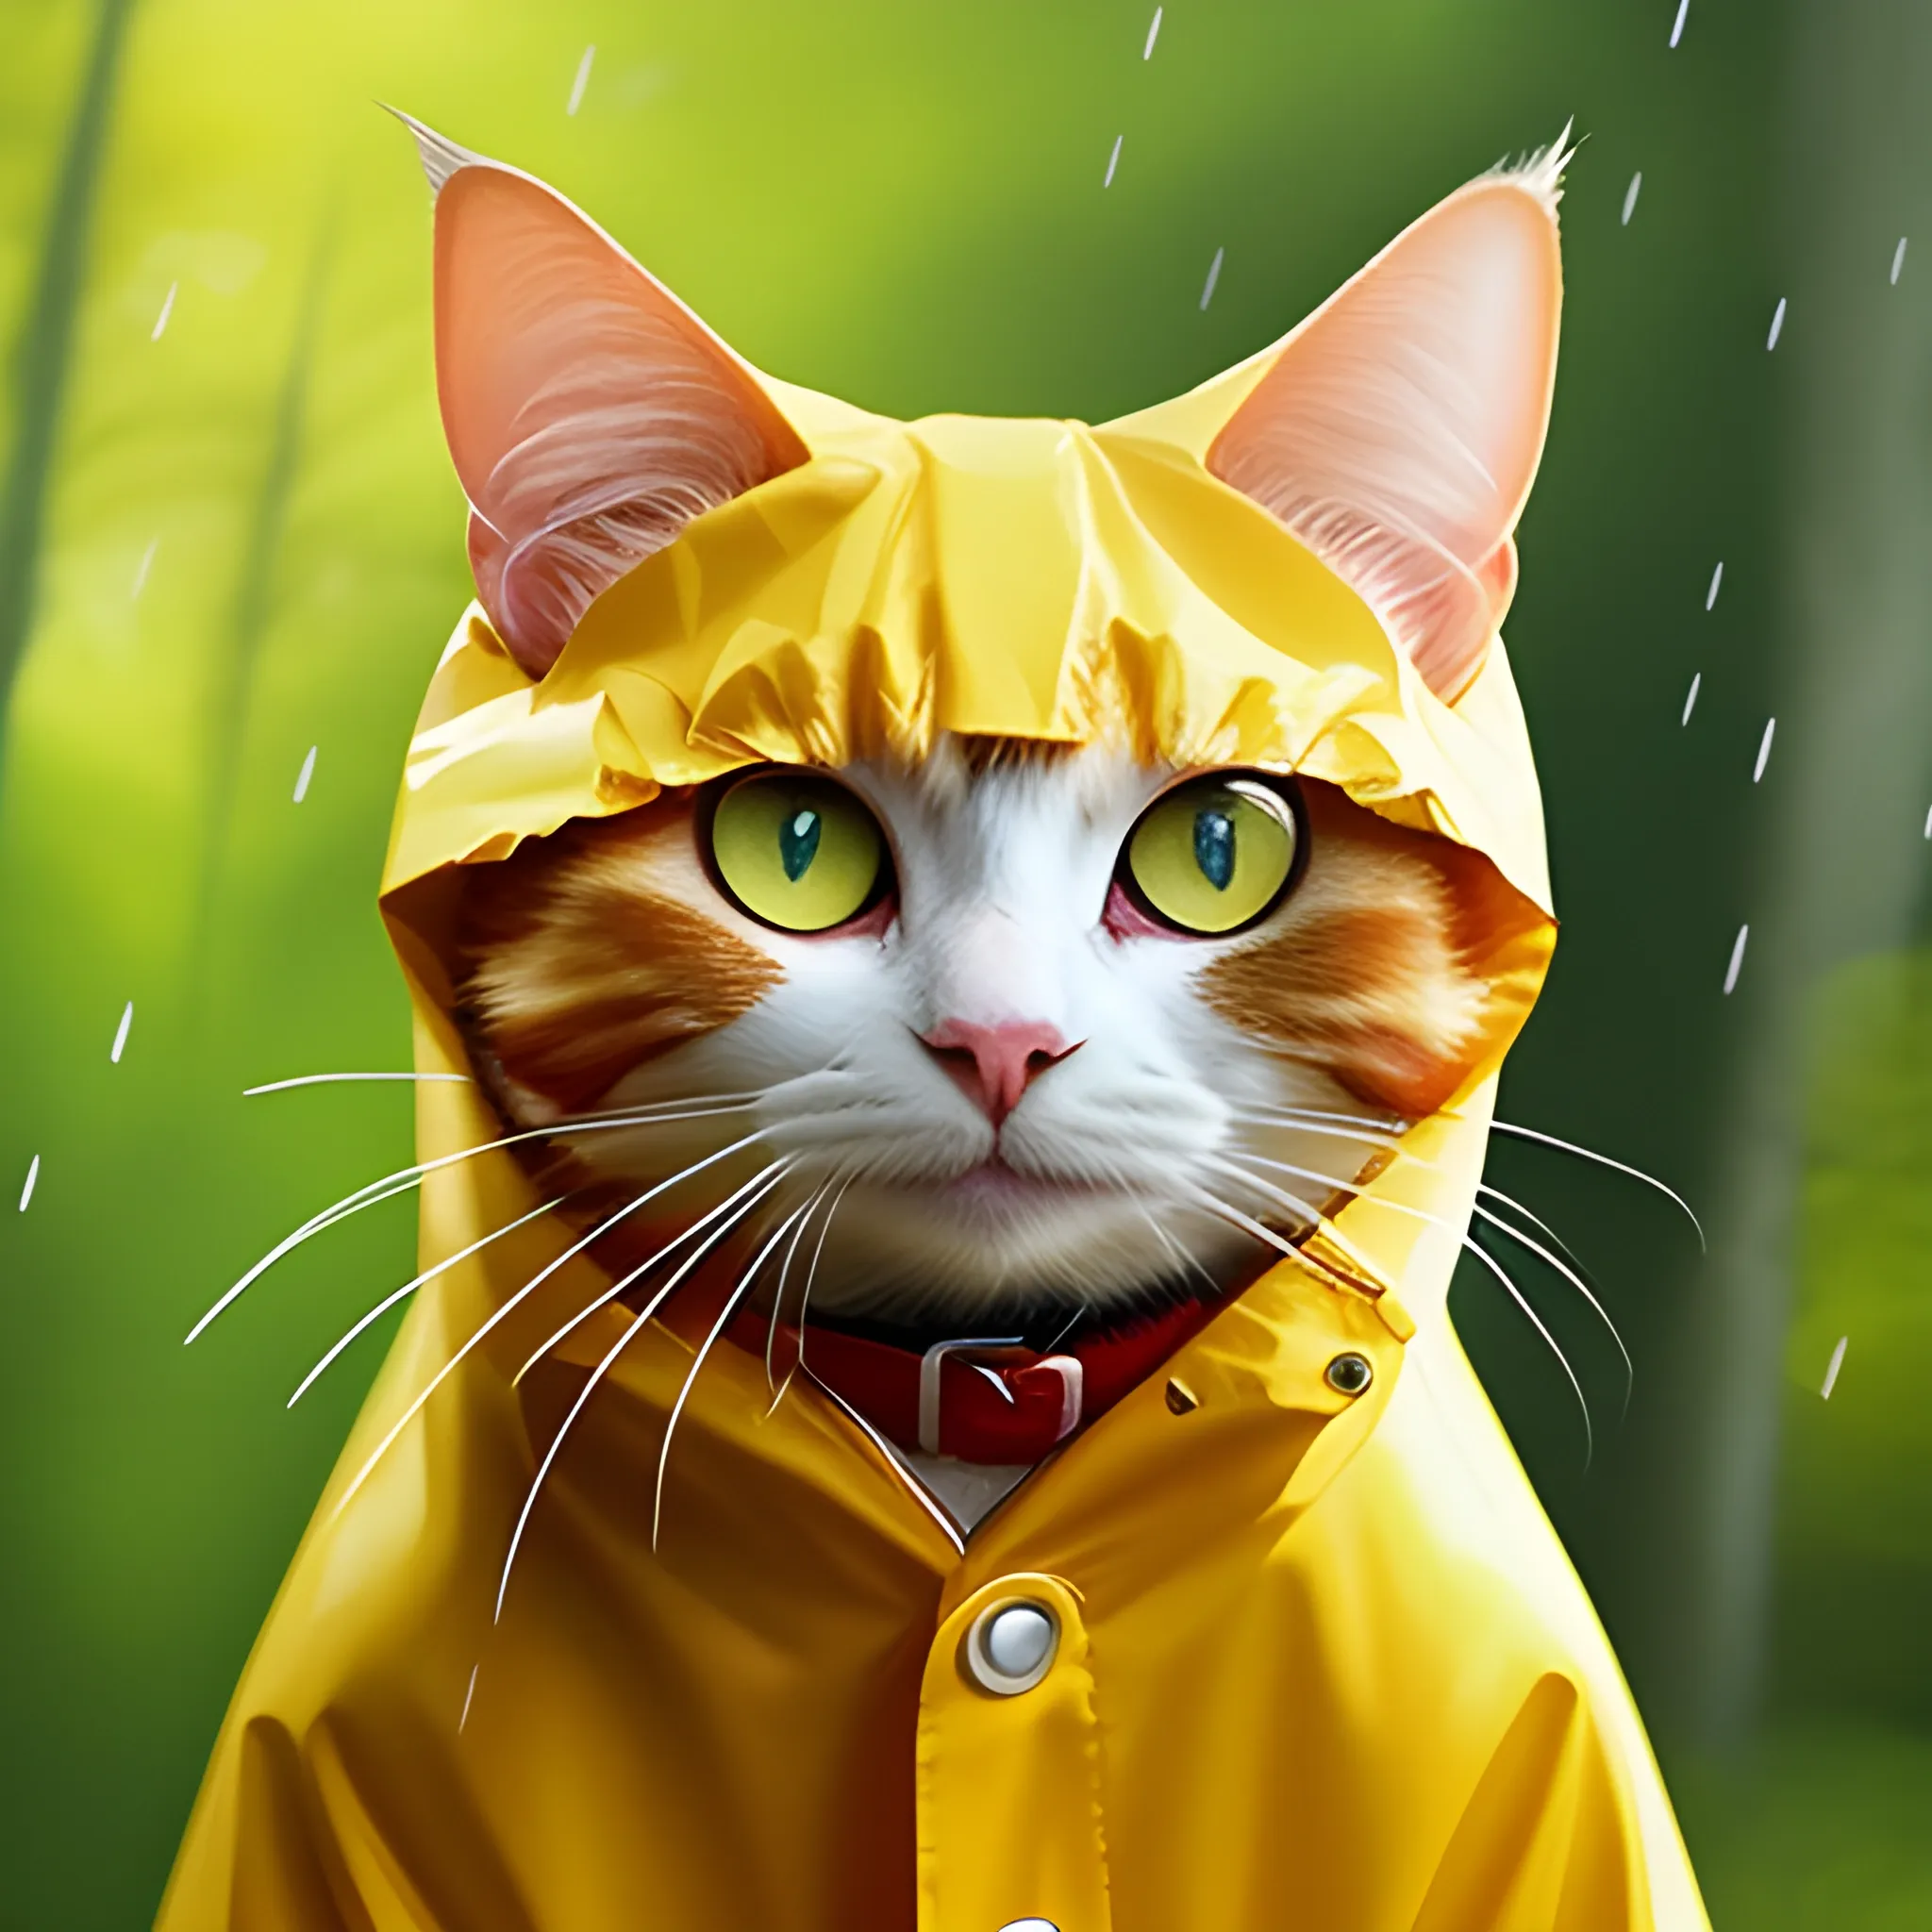 cartoon yellow raincoat